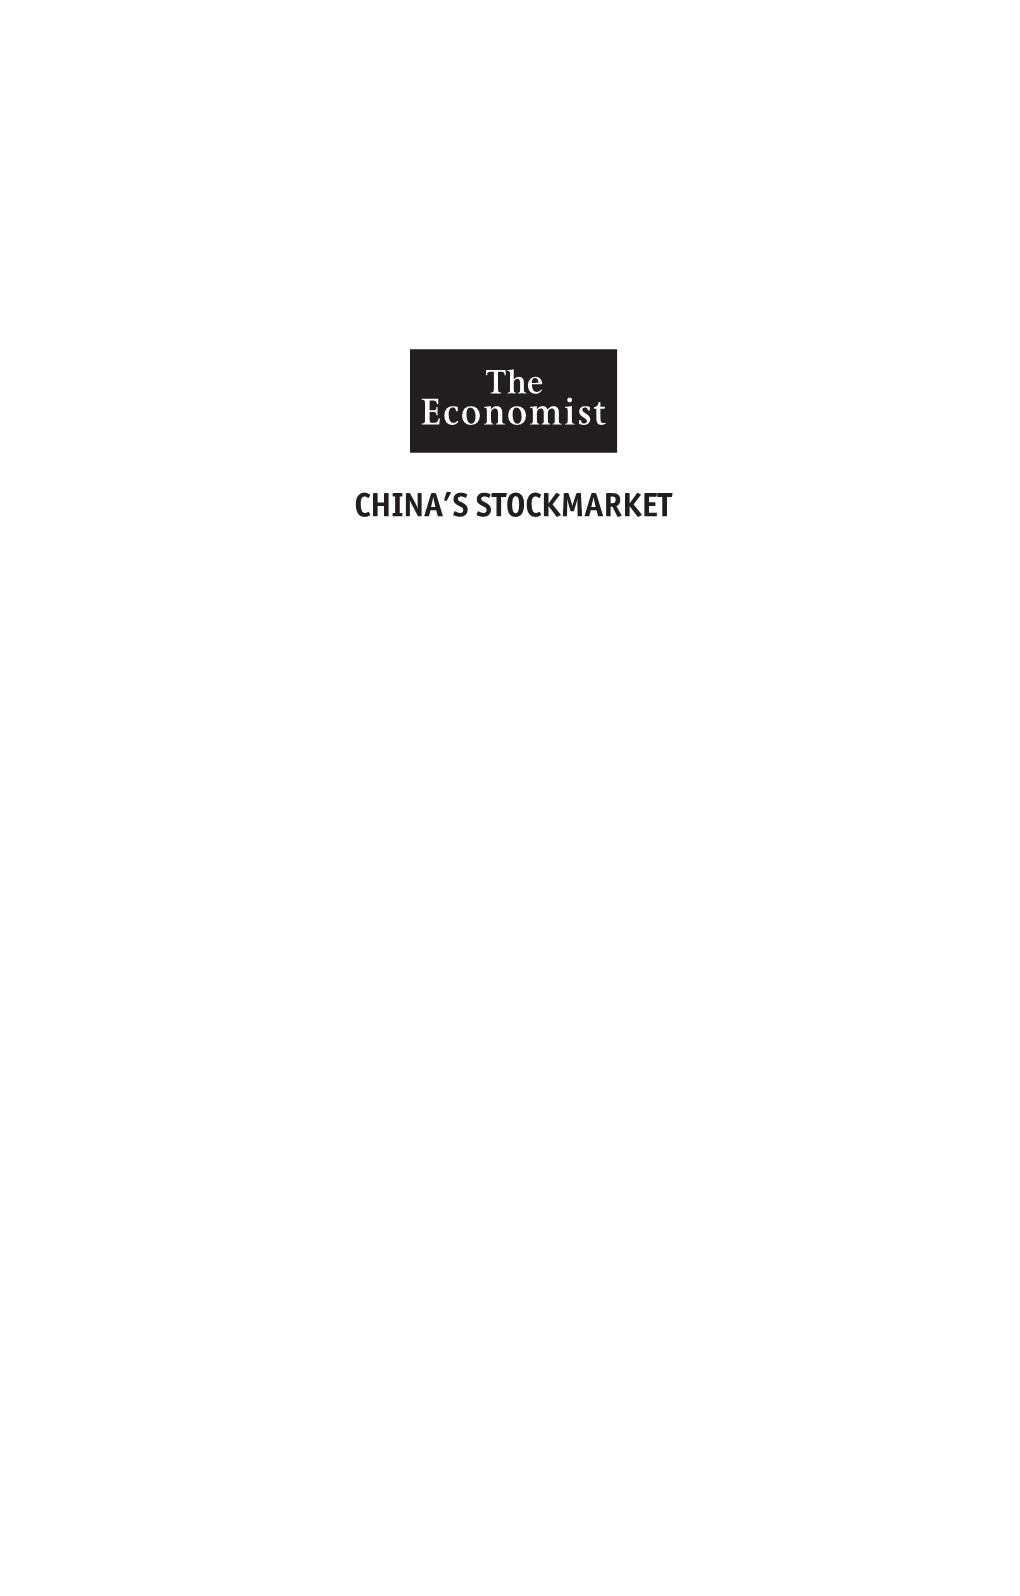 01 China's Stockmarket